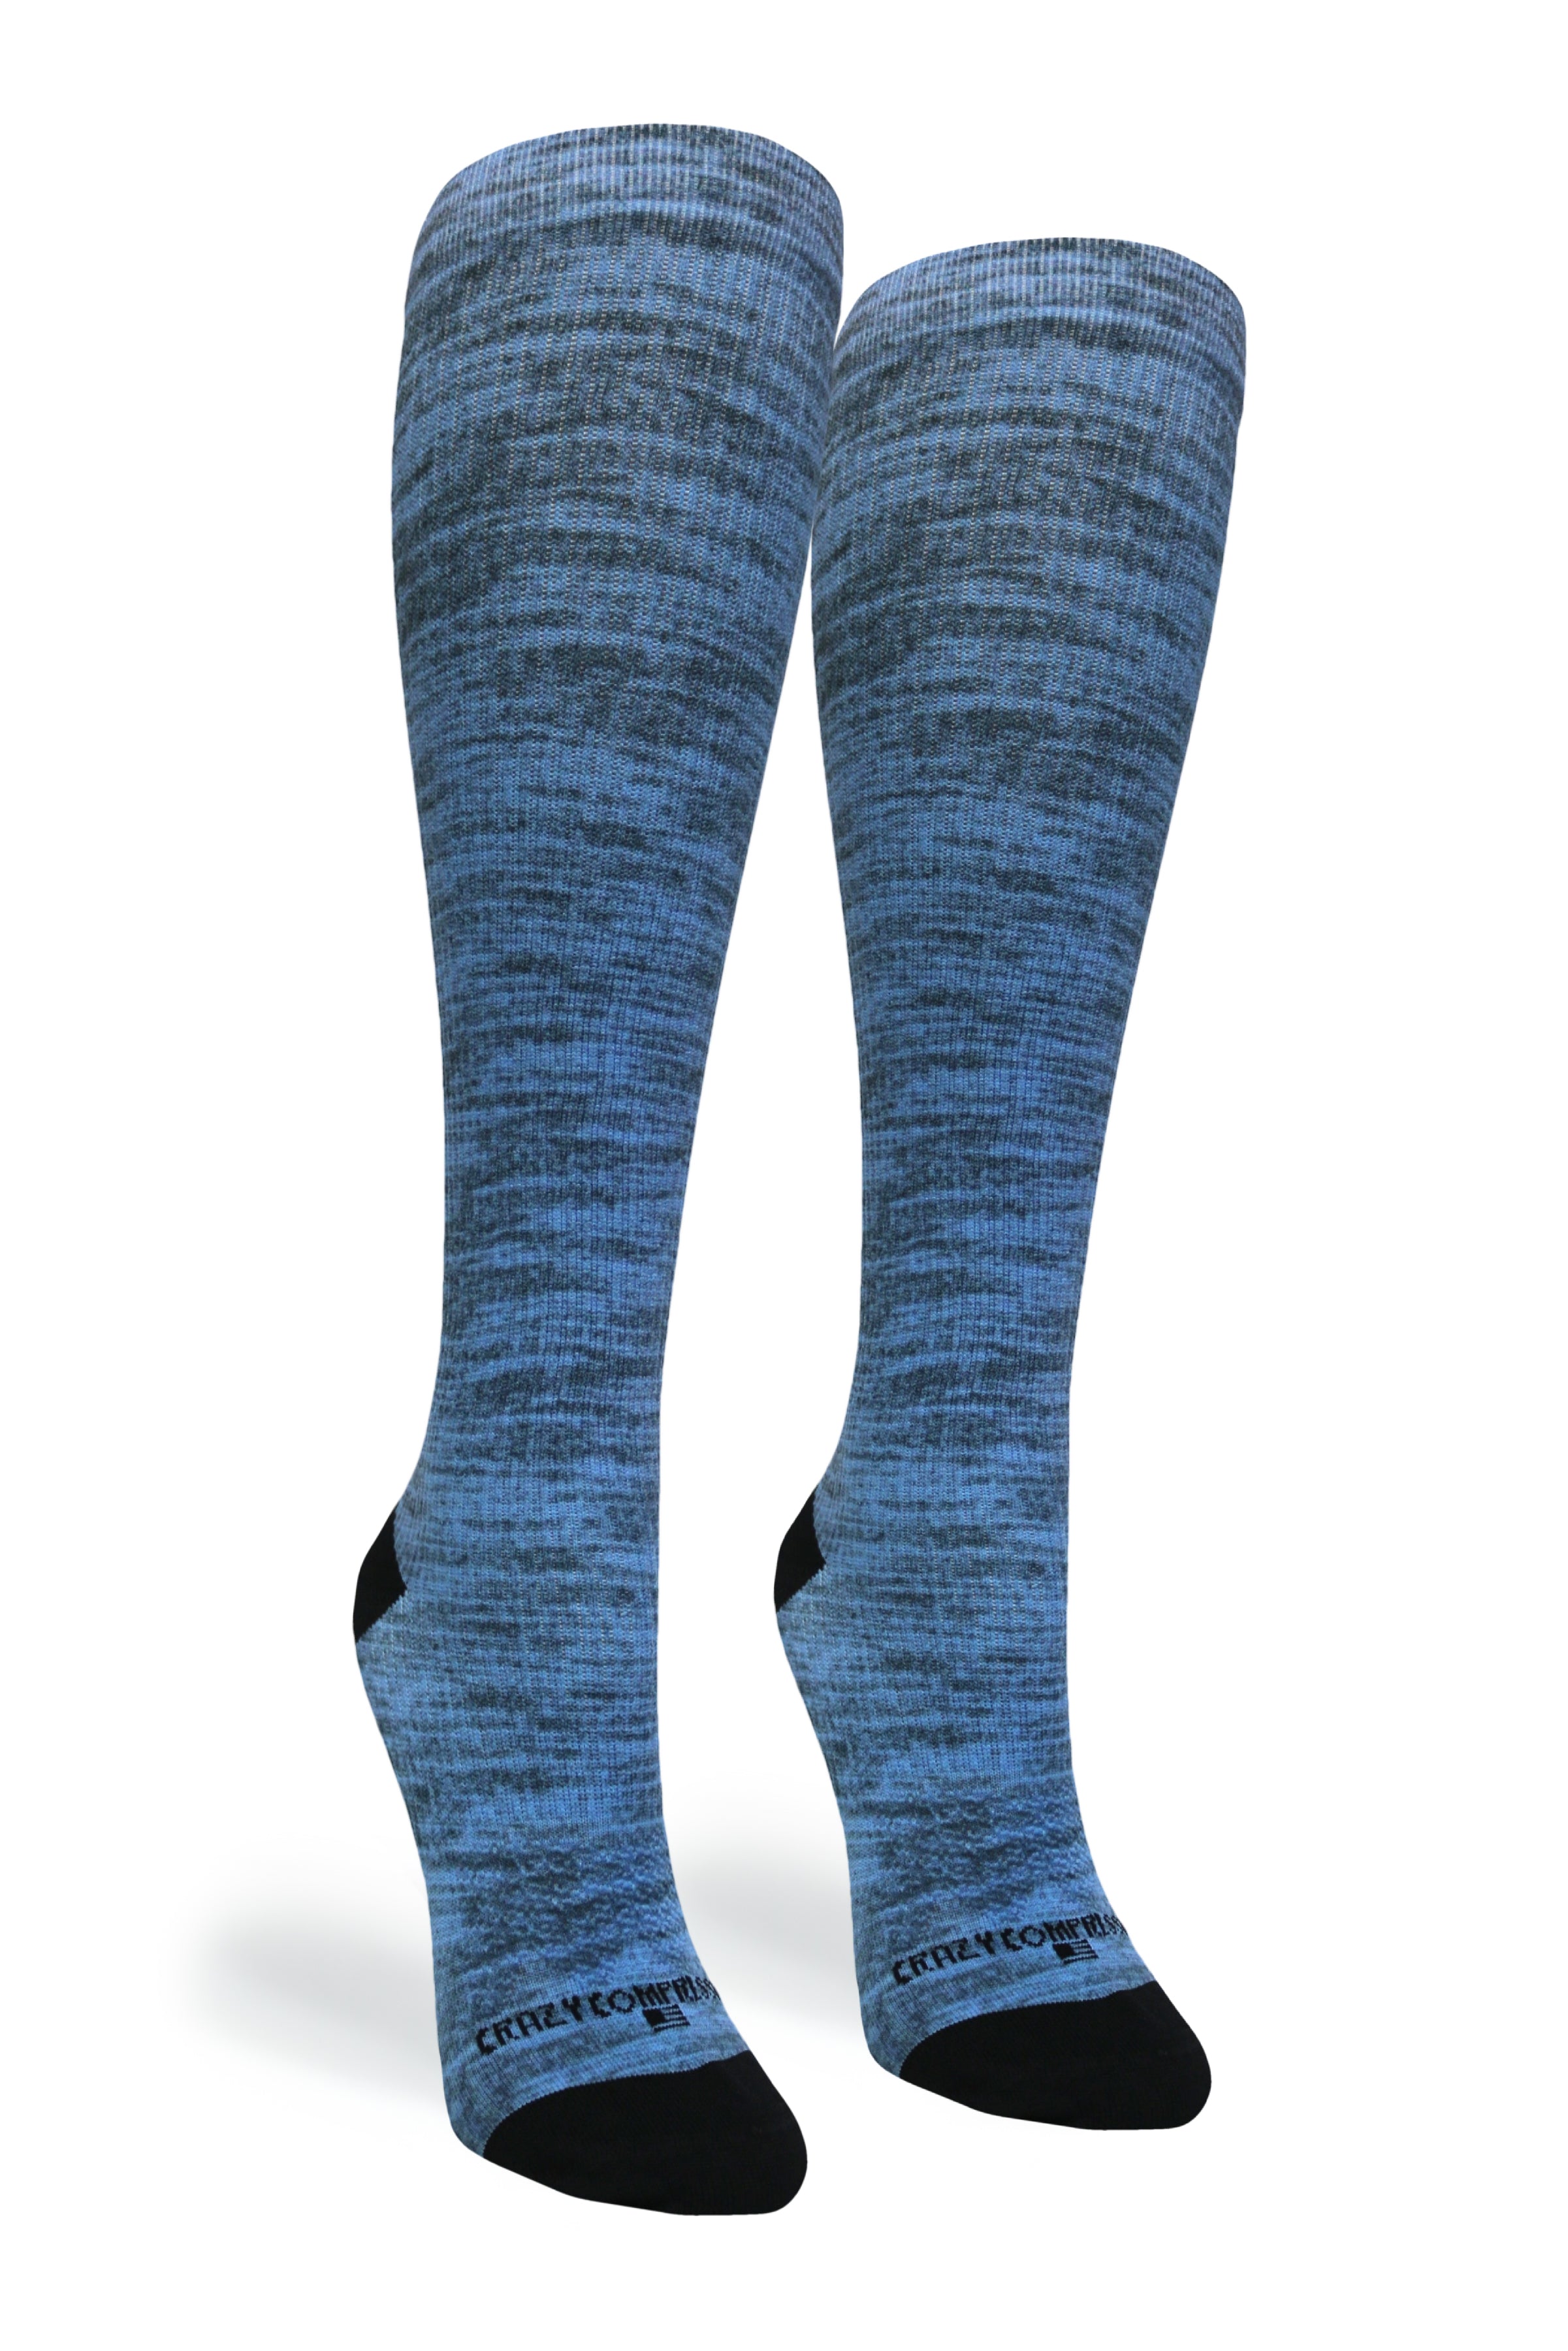 360 Blue Heather OTC Compression Socks (Standard & Extra Wide)